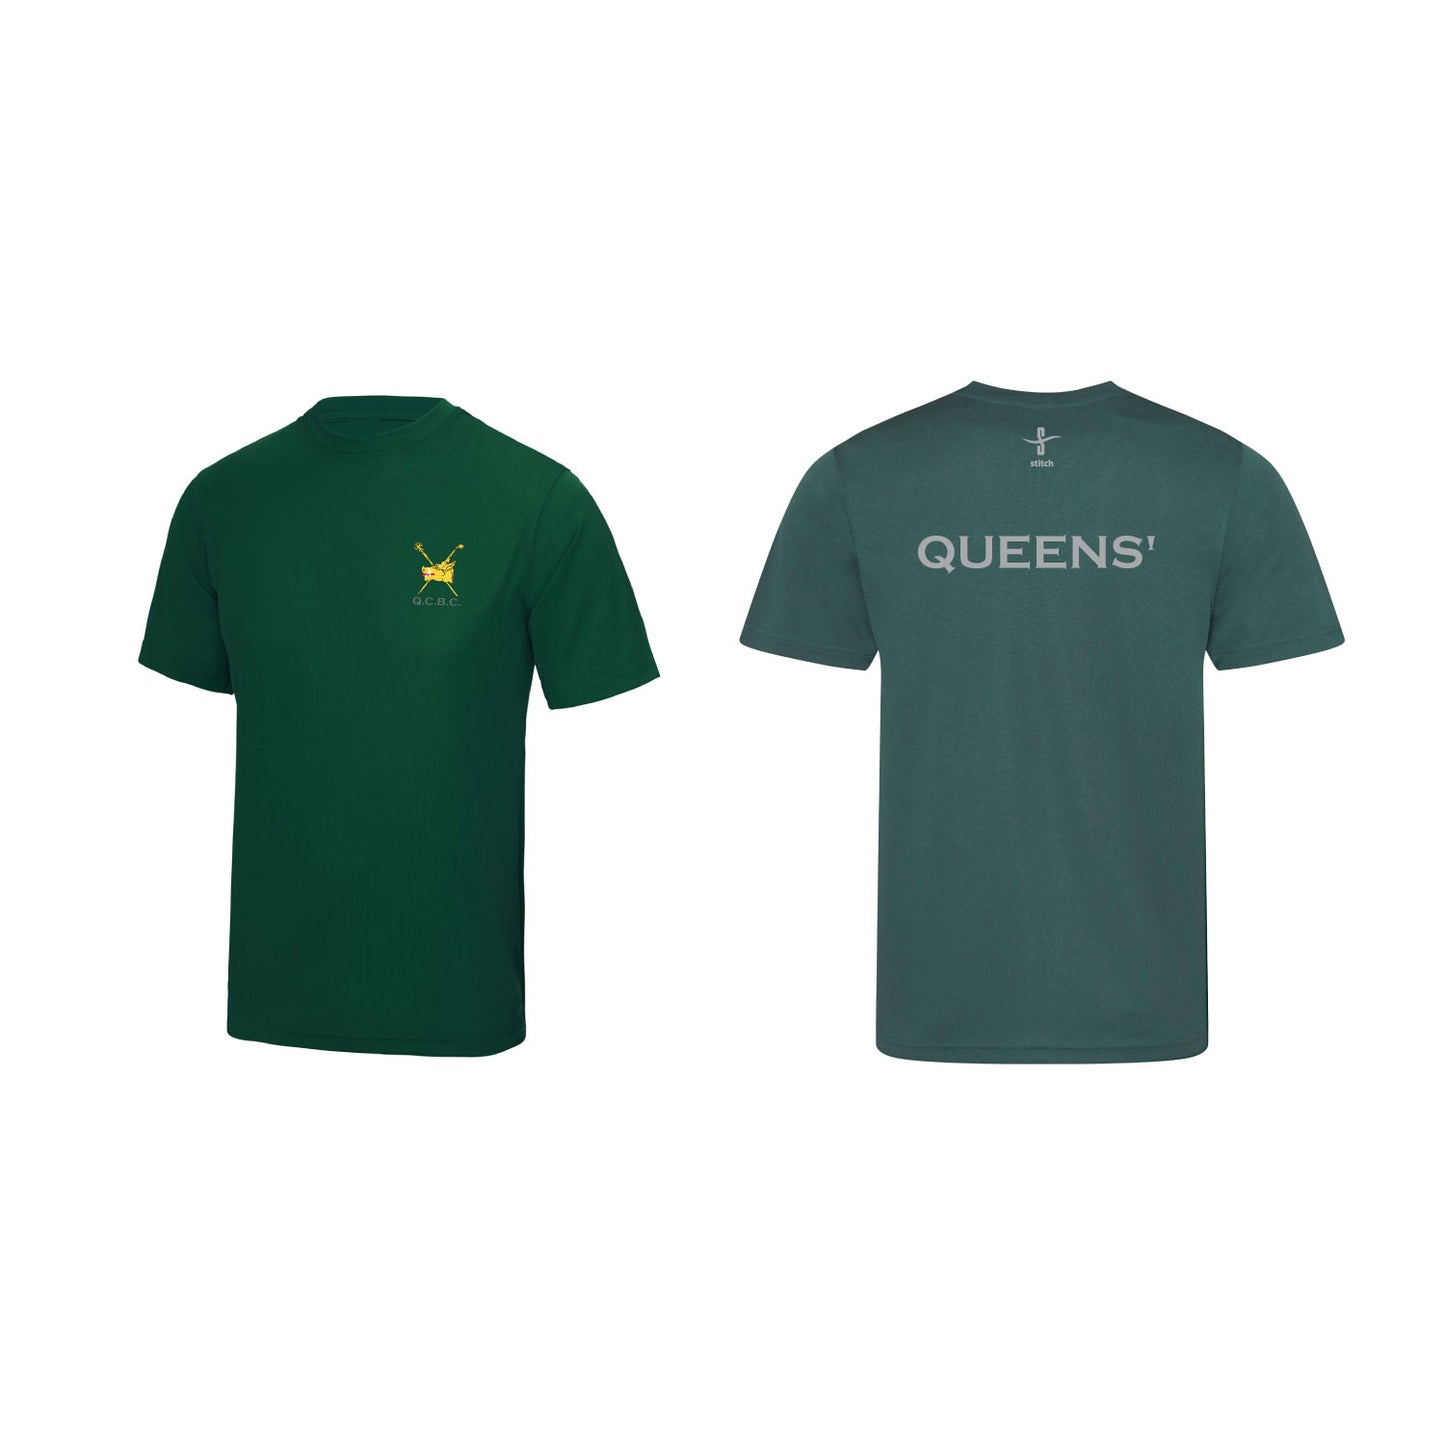 Queens' College Training T-shirt